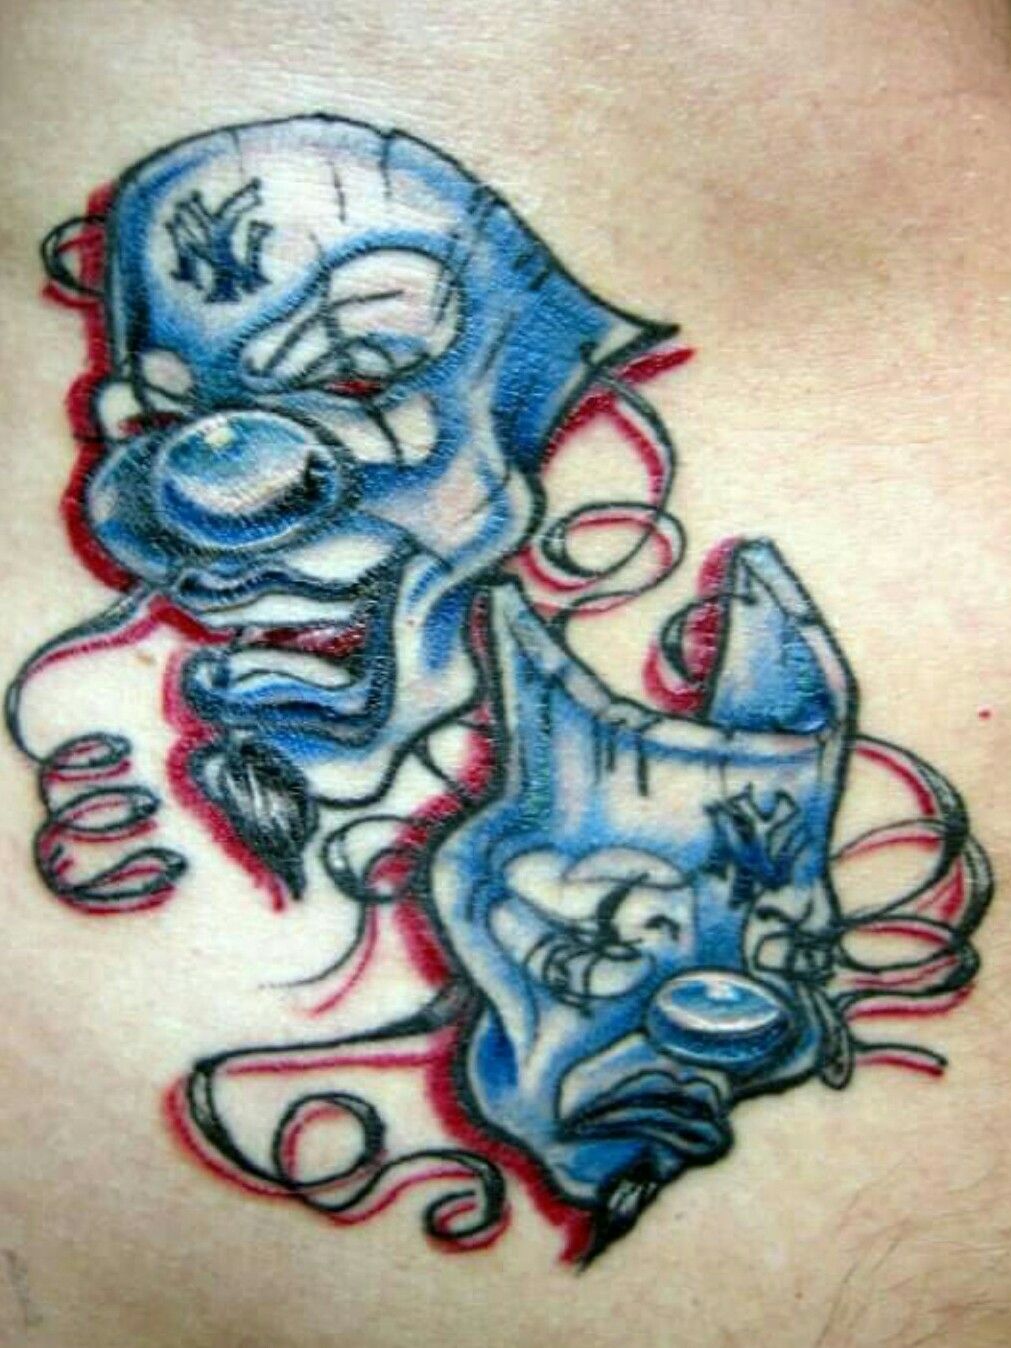 Tattoo uploaded by Frankie Frieri • Yankees logo • Tattoodo